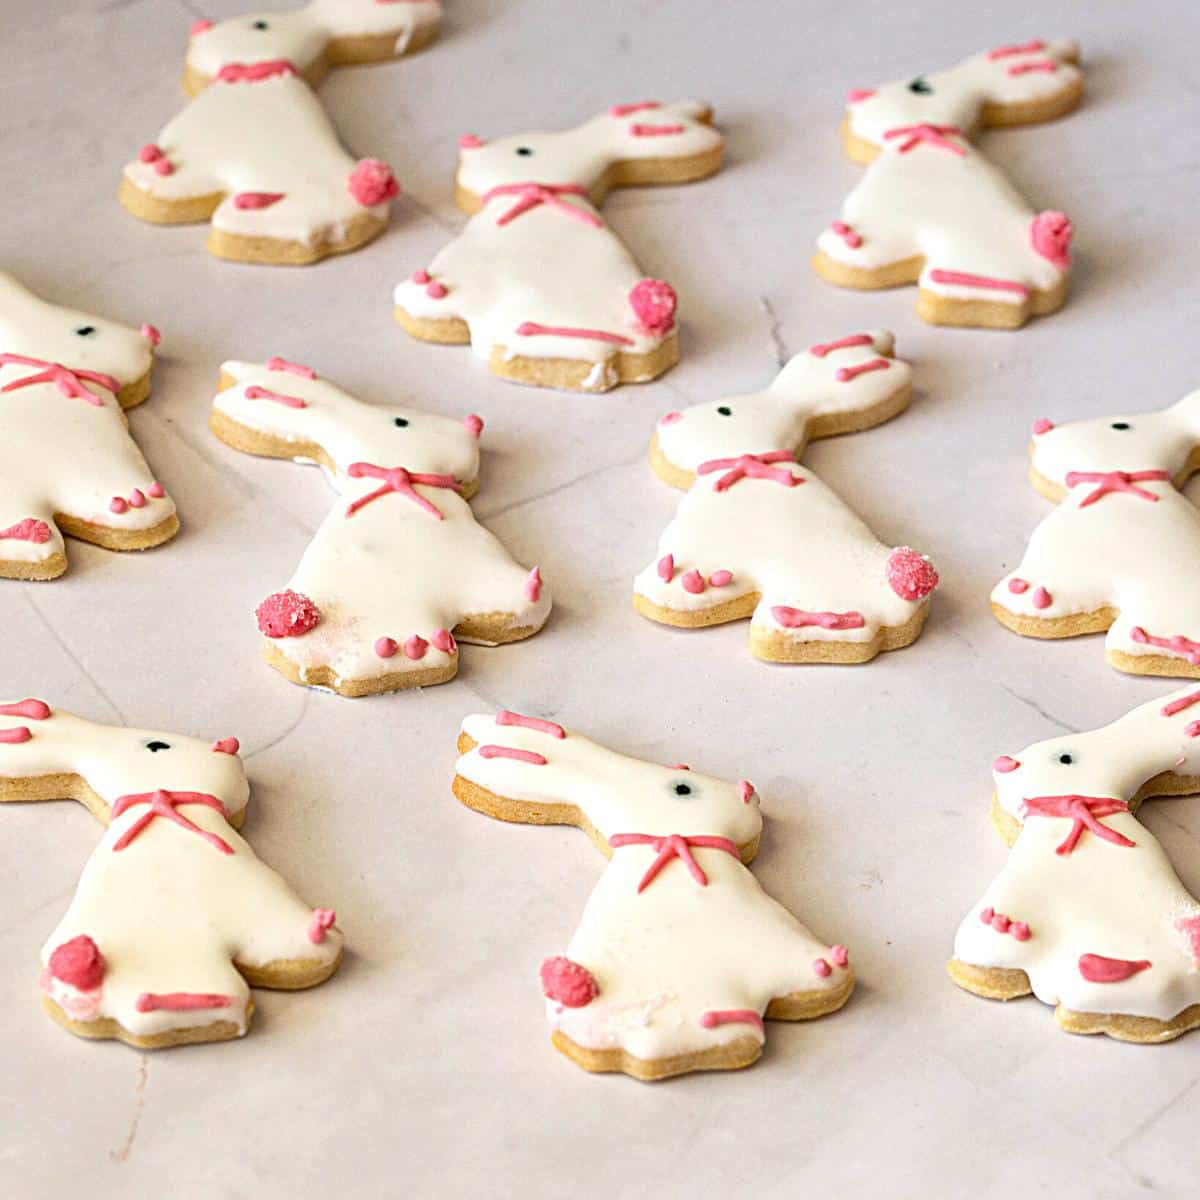 Bunny sugar cookies with royal icing.